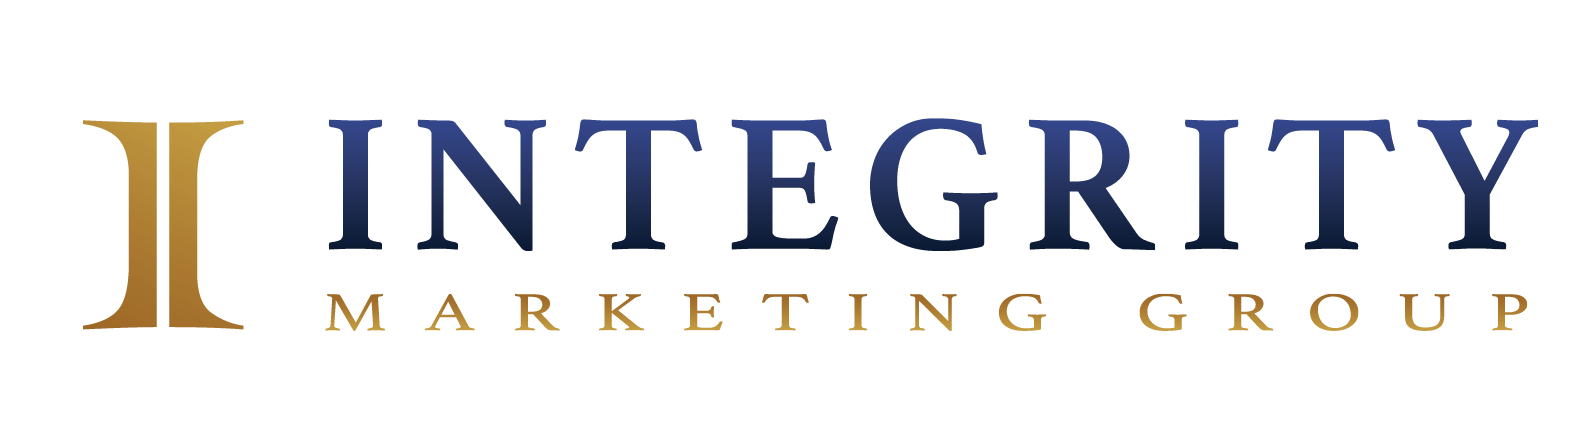 Integrity Marketing Group